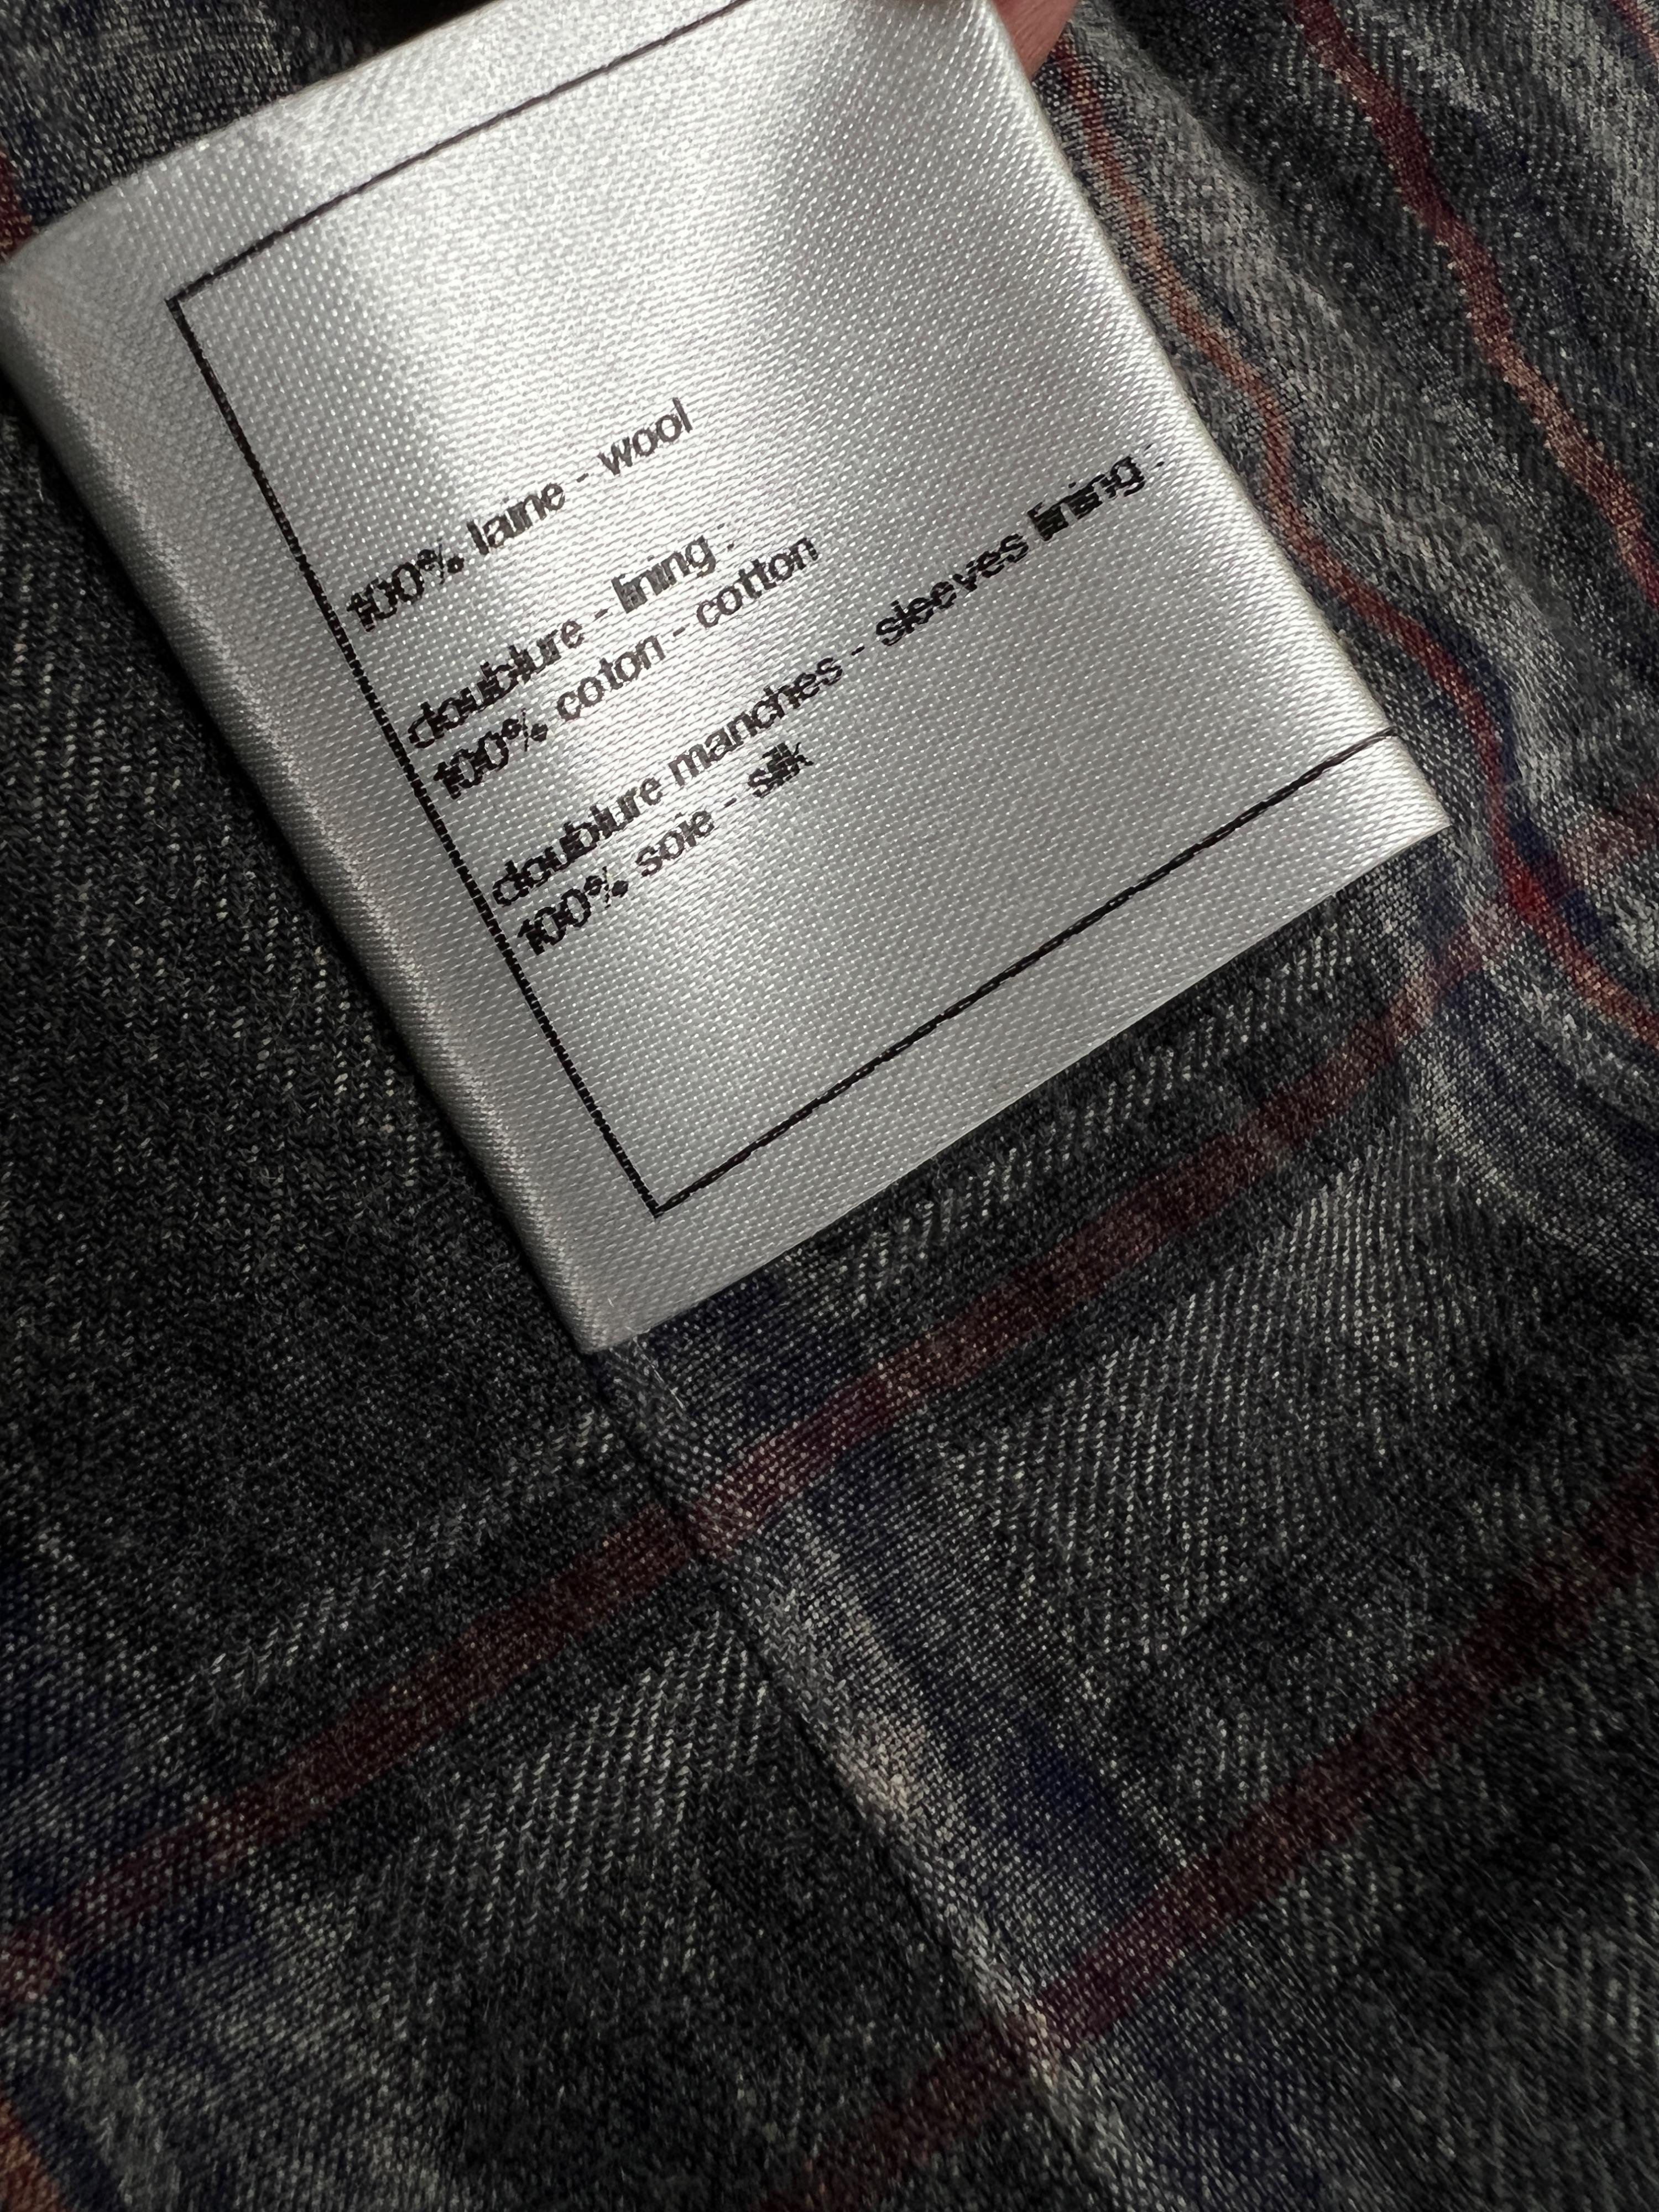 Chanel Edinburgh Collection Gripoix Buttons Tweed Jacket 9